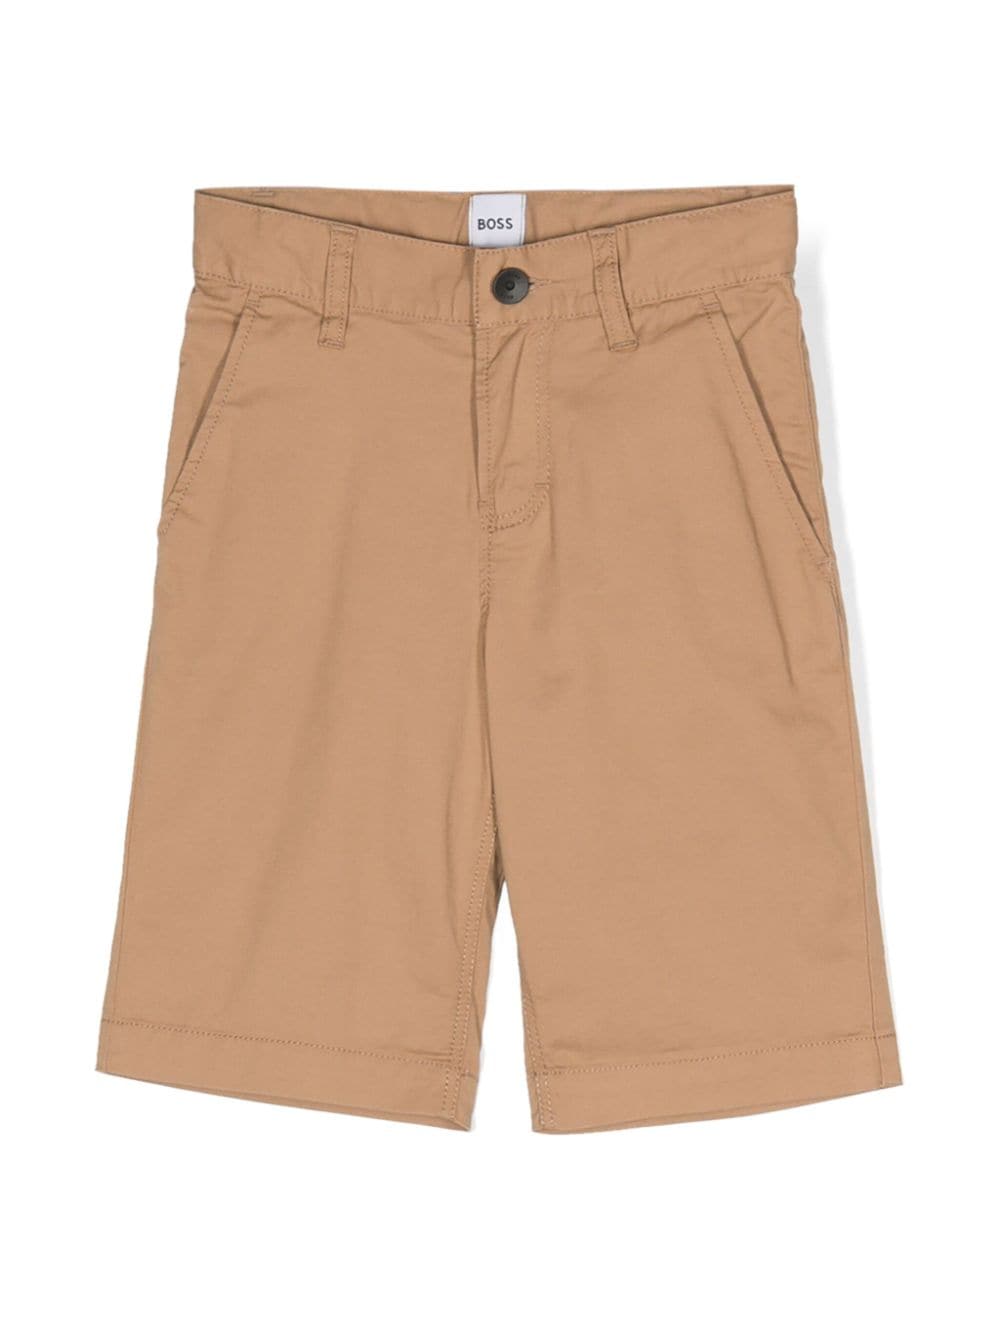 Brown Bermuda shorts for boys